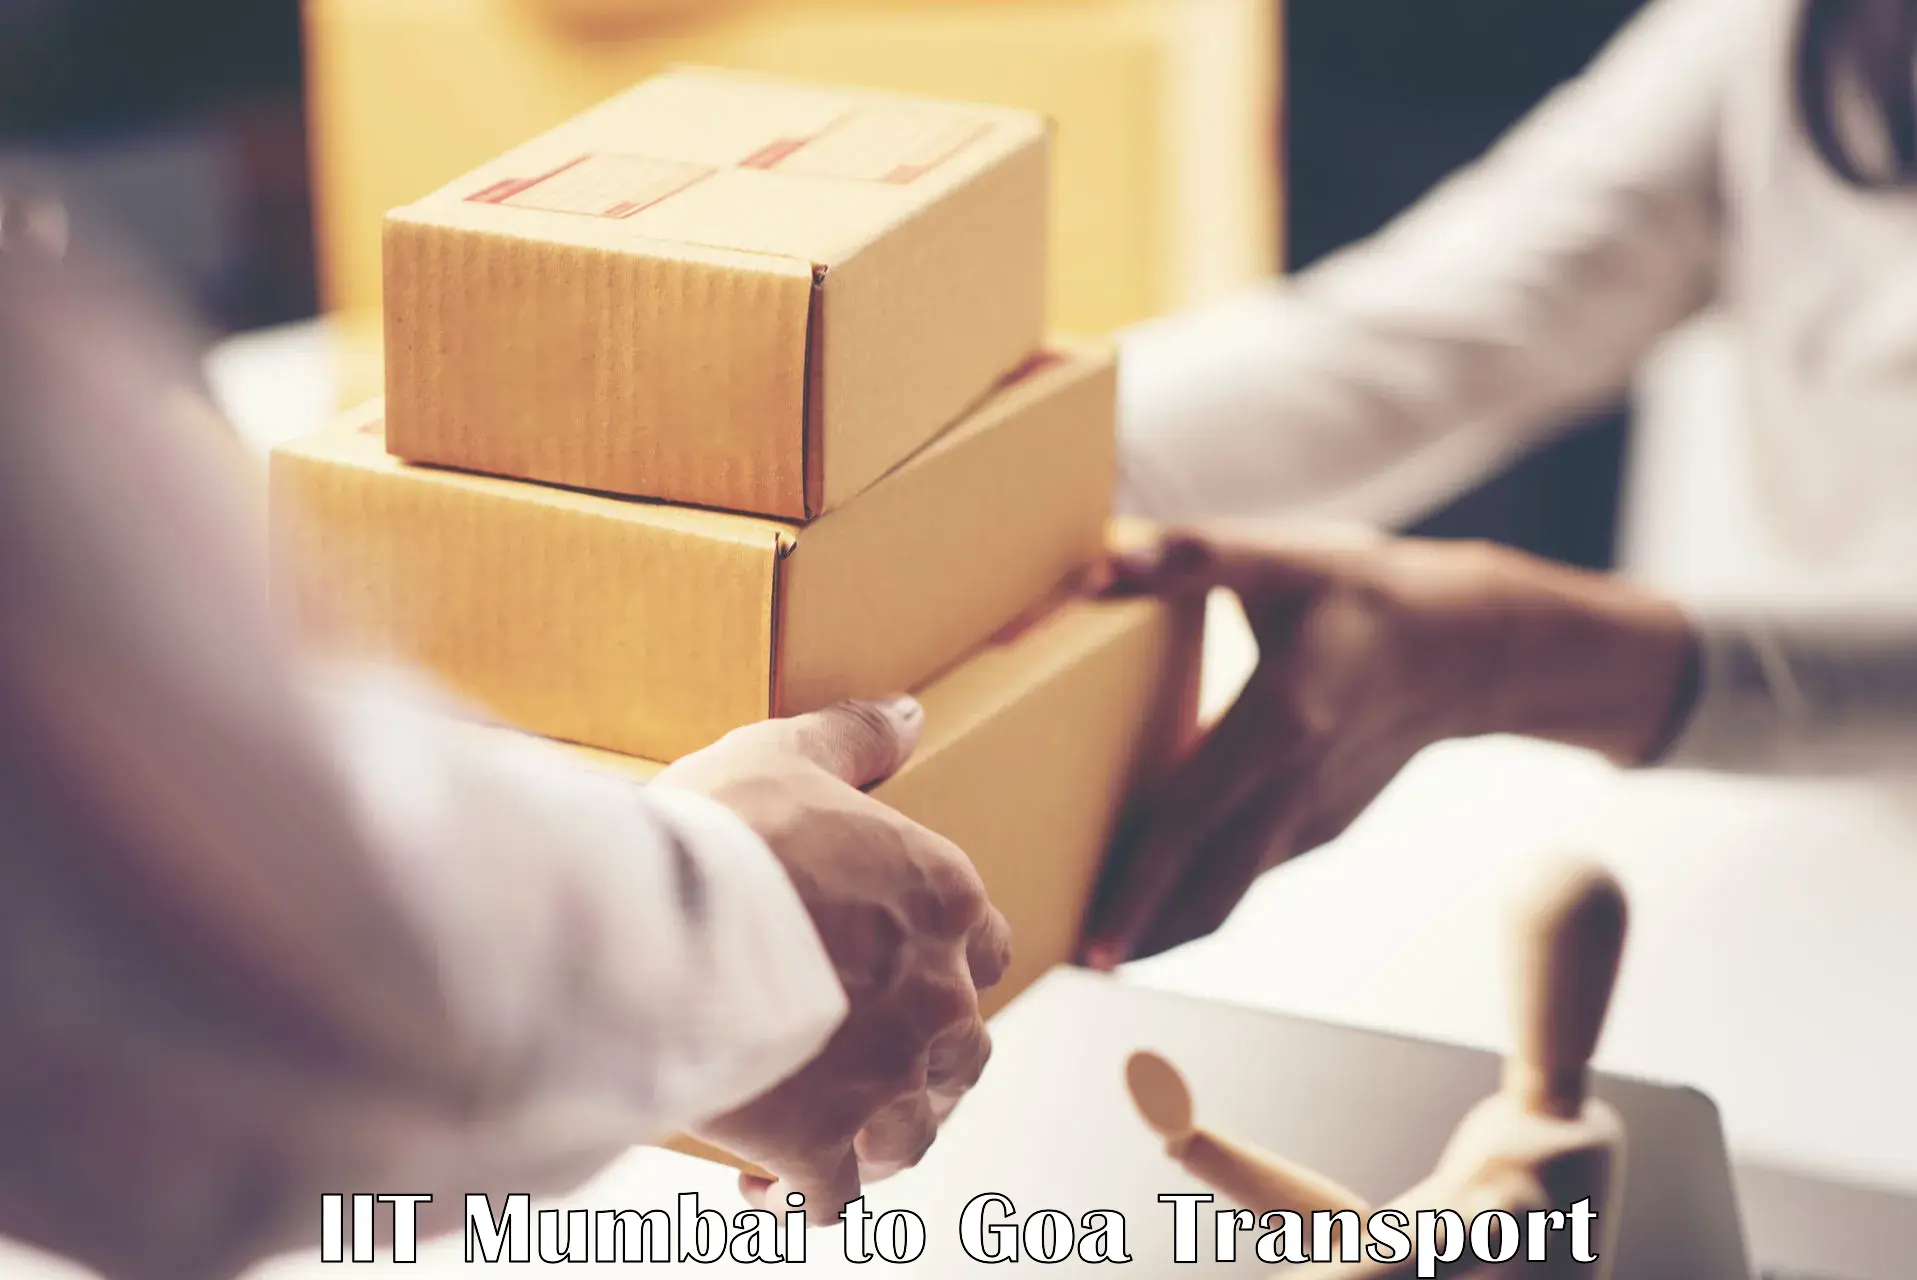 Container transport service IIT Mumbai to Goa